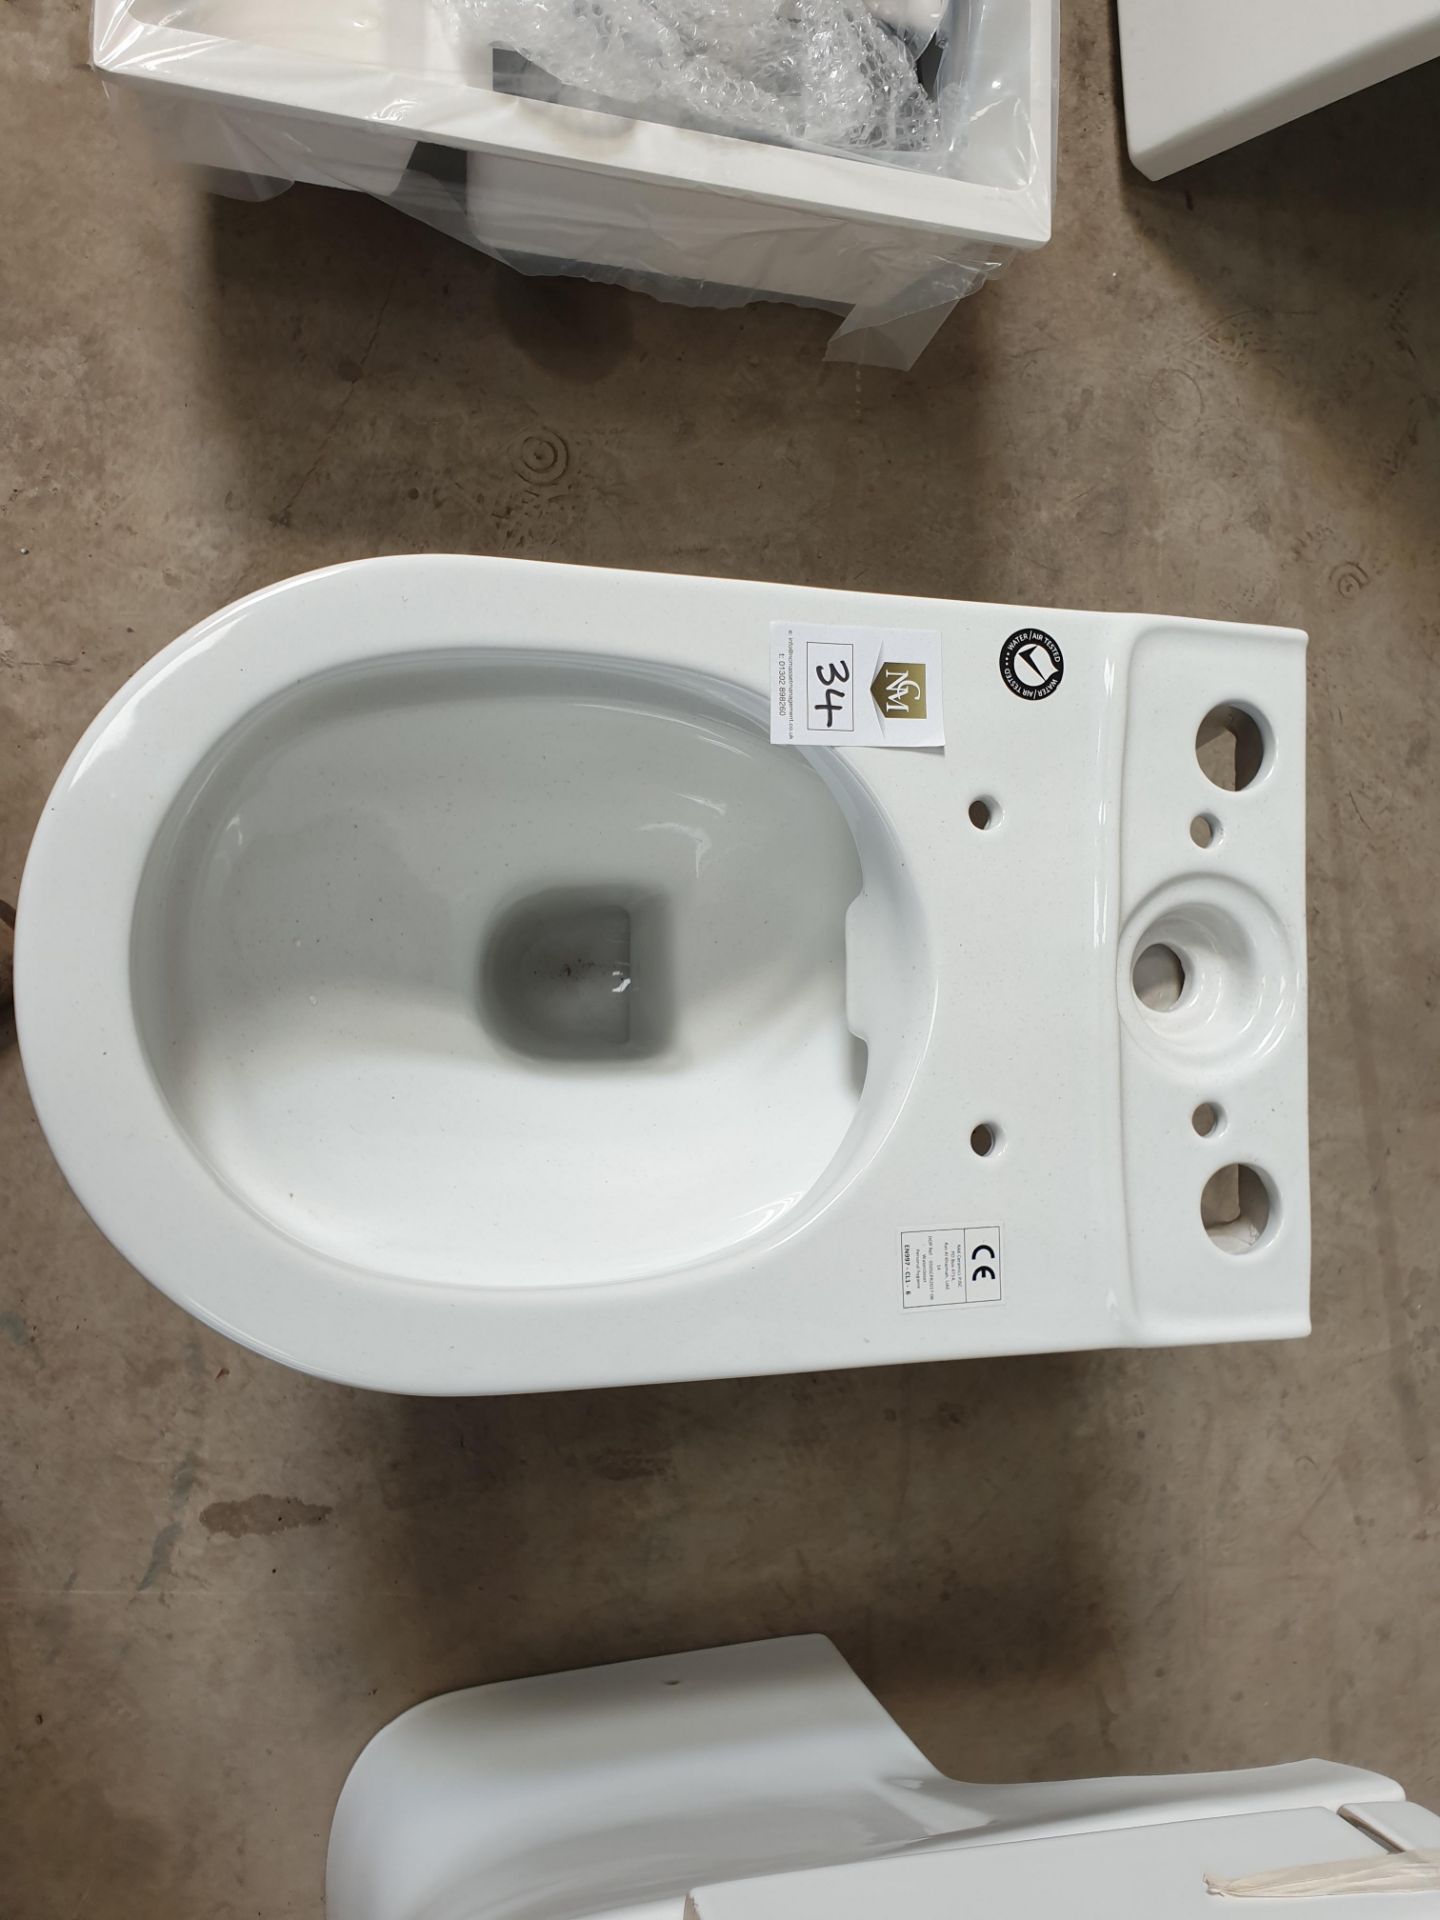 Toilet - Image 3 of 3